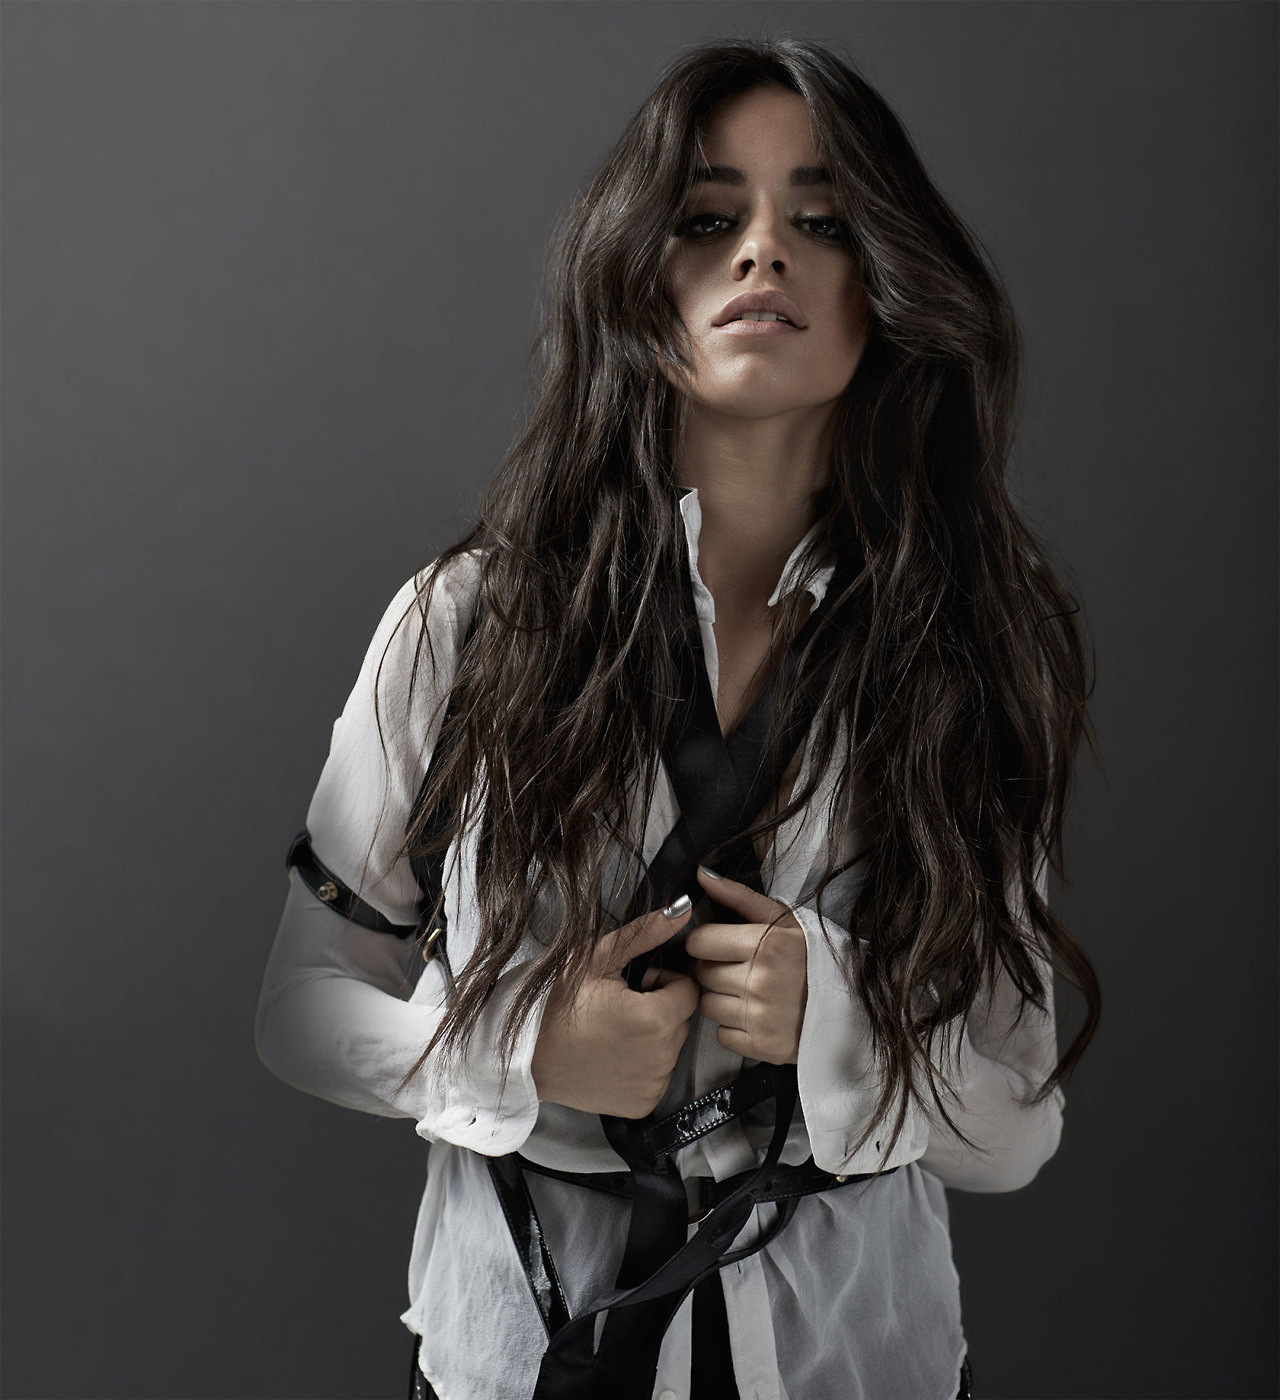 Camila Cabello photographed for Marie Claire.: Daily Camila Cabello